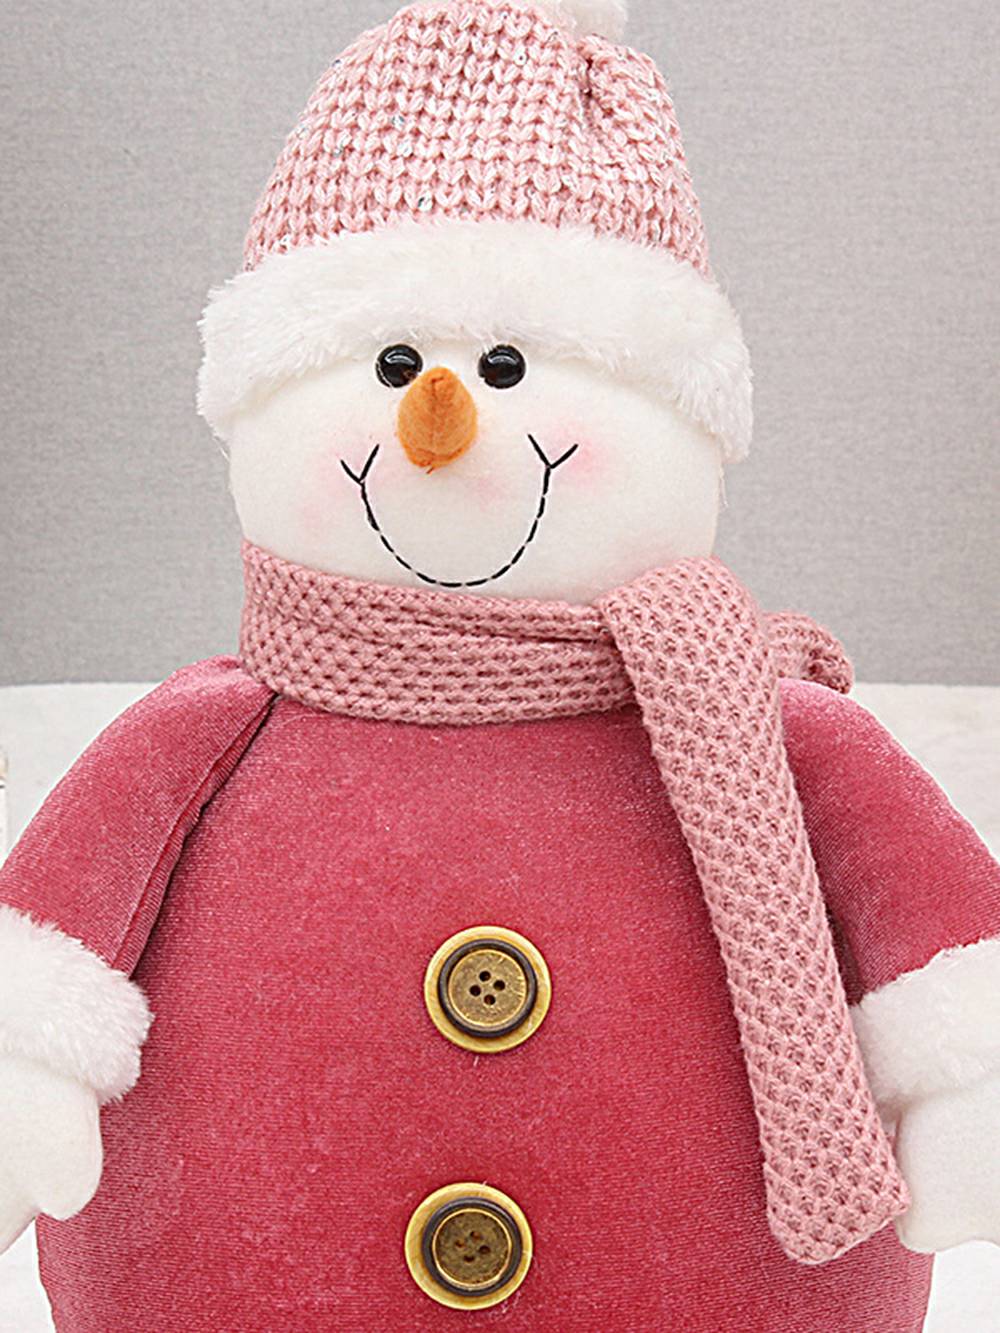 Rosa tyg stickad hatt snögubbe plyschleksak juldekoration